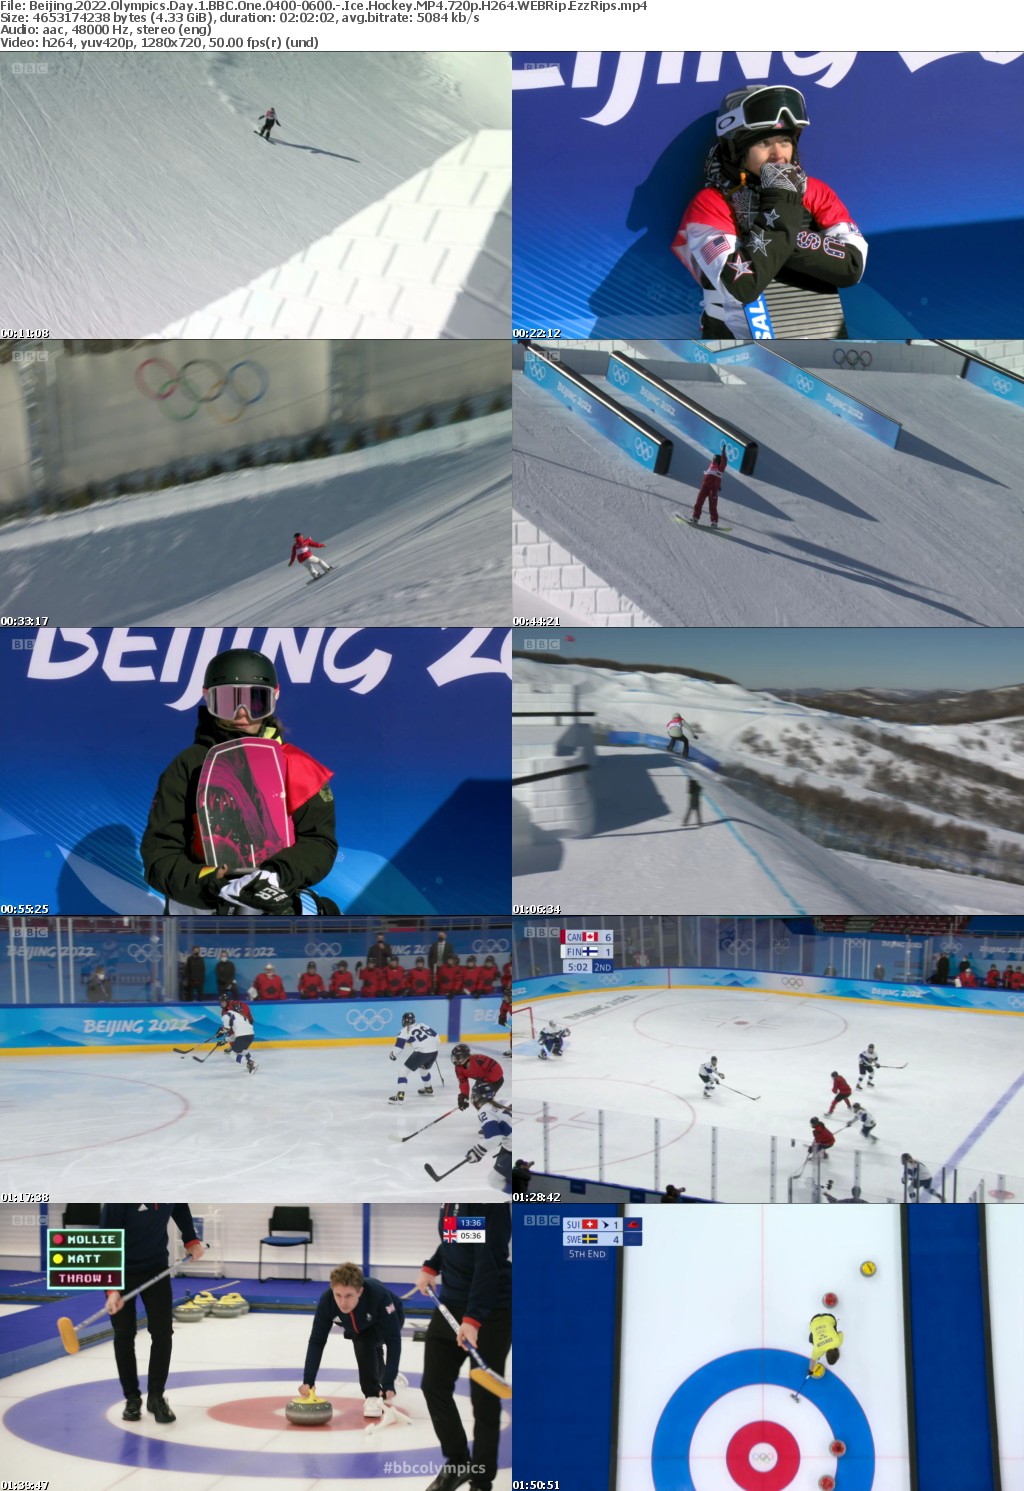 Beijing 2022 Olympics Day 1 BBC One 0400-0600 Ice Hockey MP4 720p H264 WEBRip EzzRips